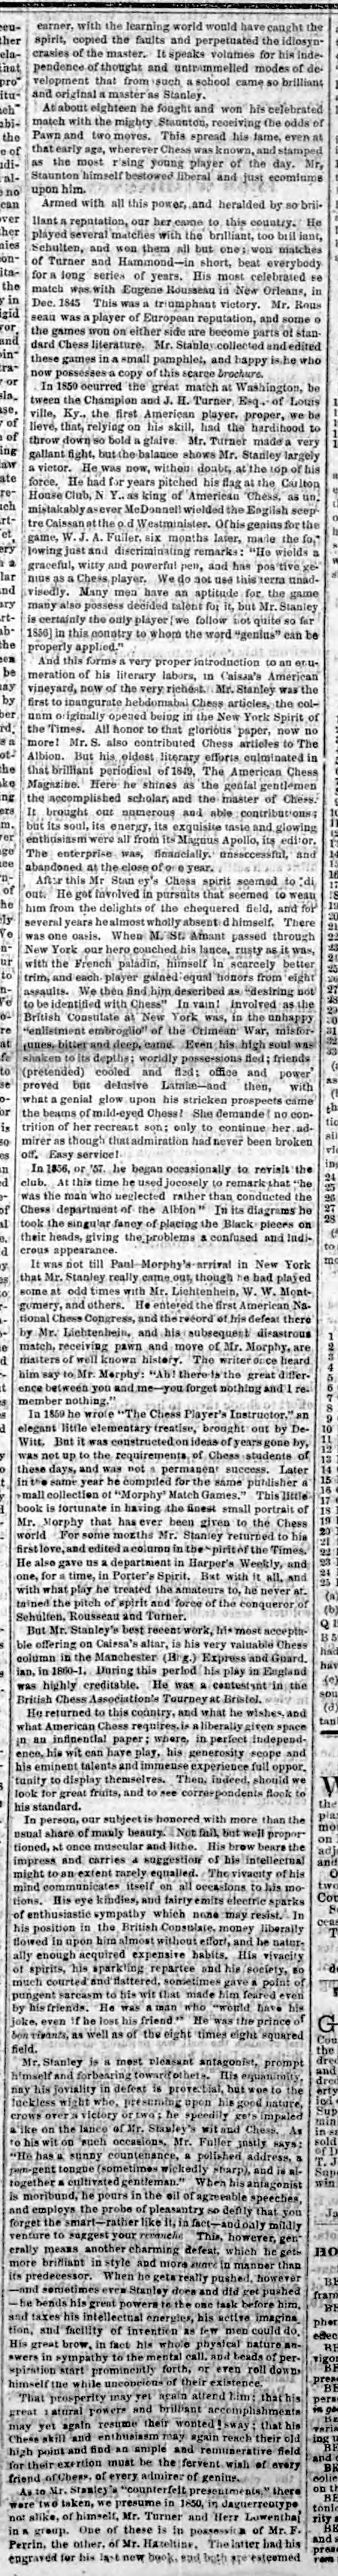 1867.01.07-02 Macon Georgia Weekly Telegraph.jpg